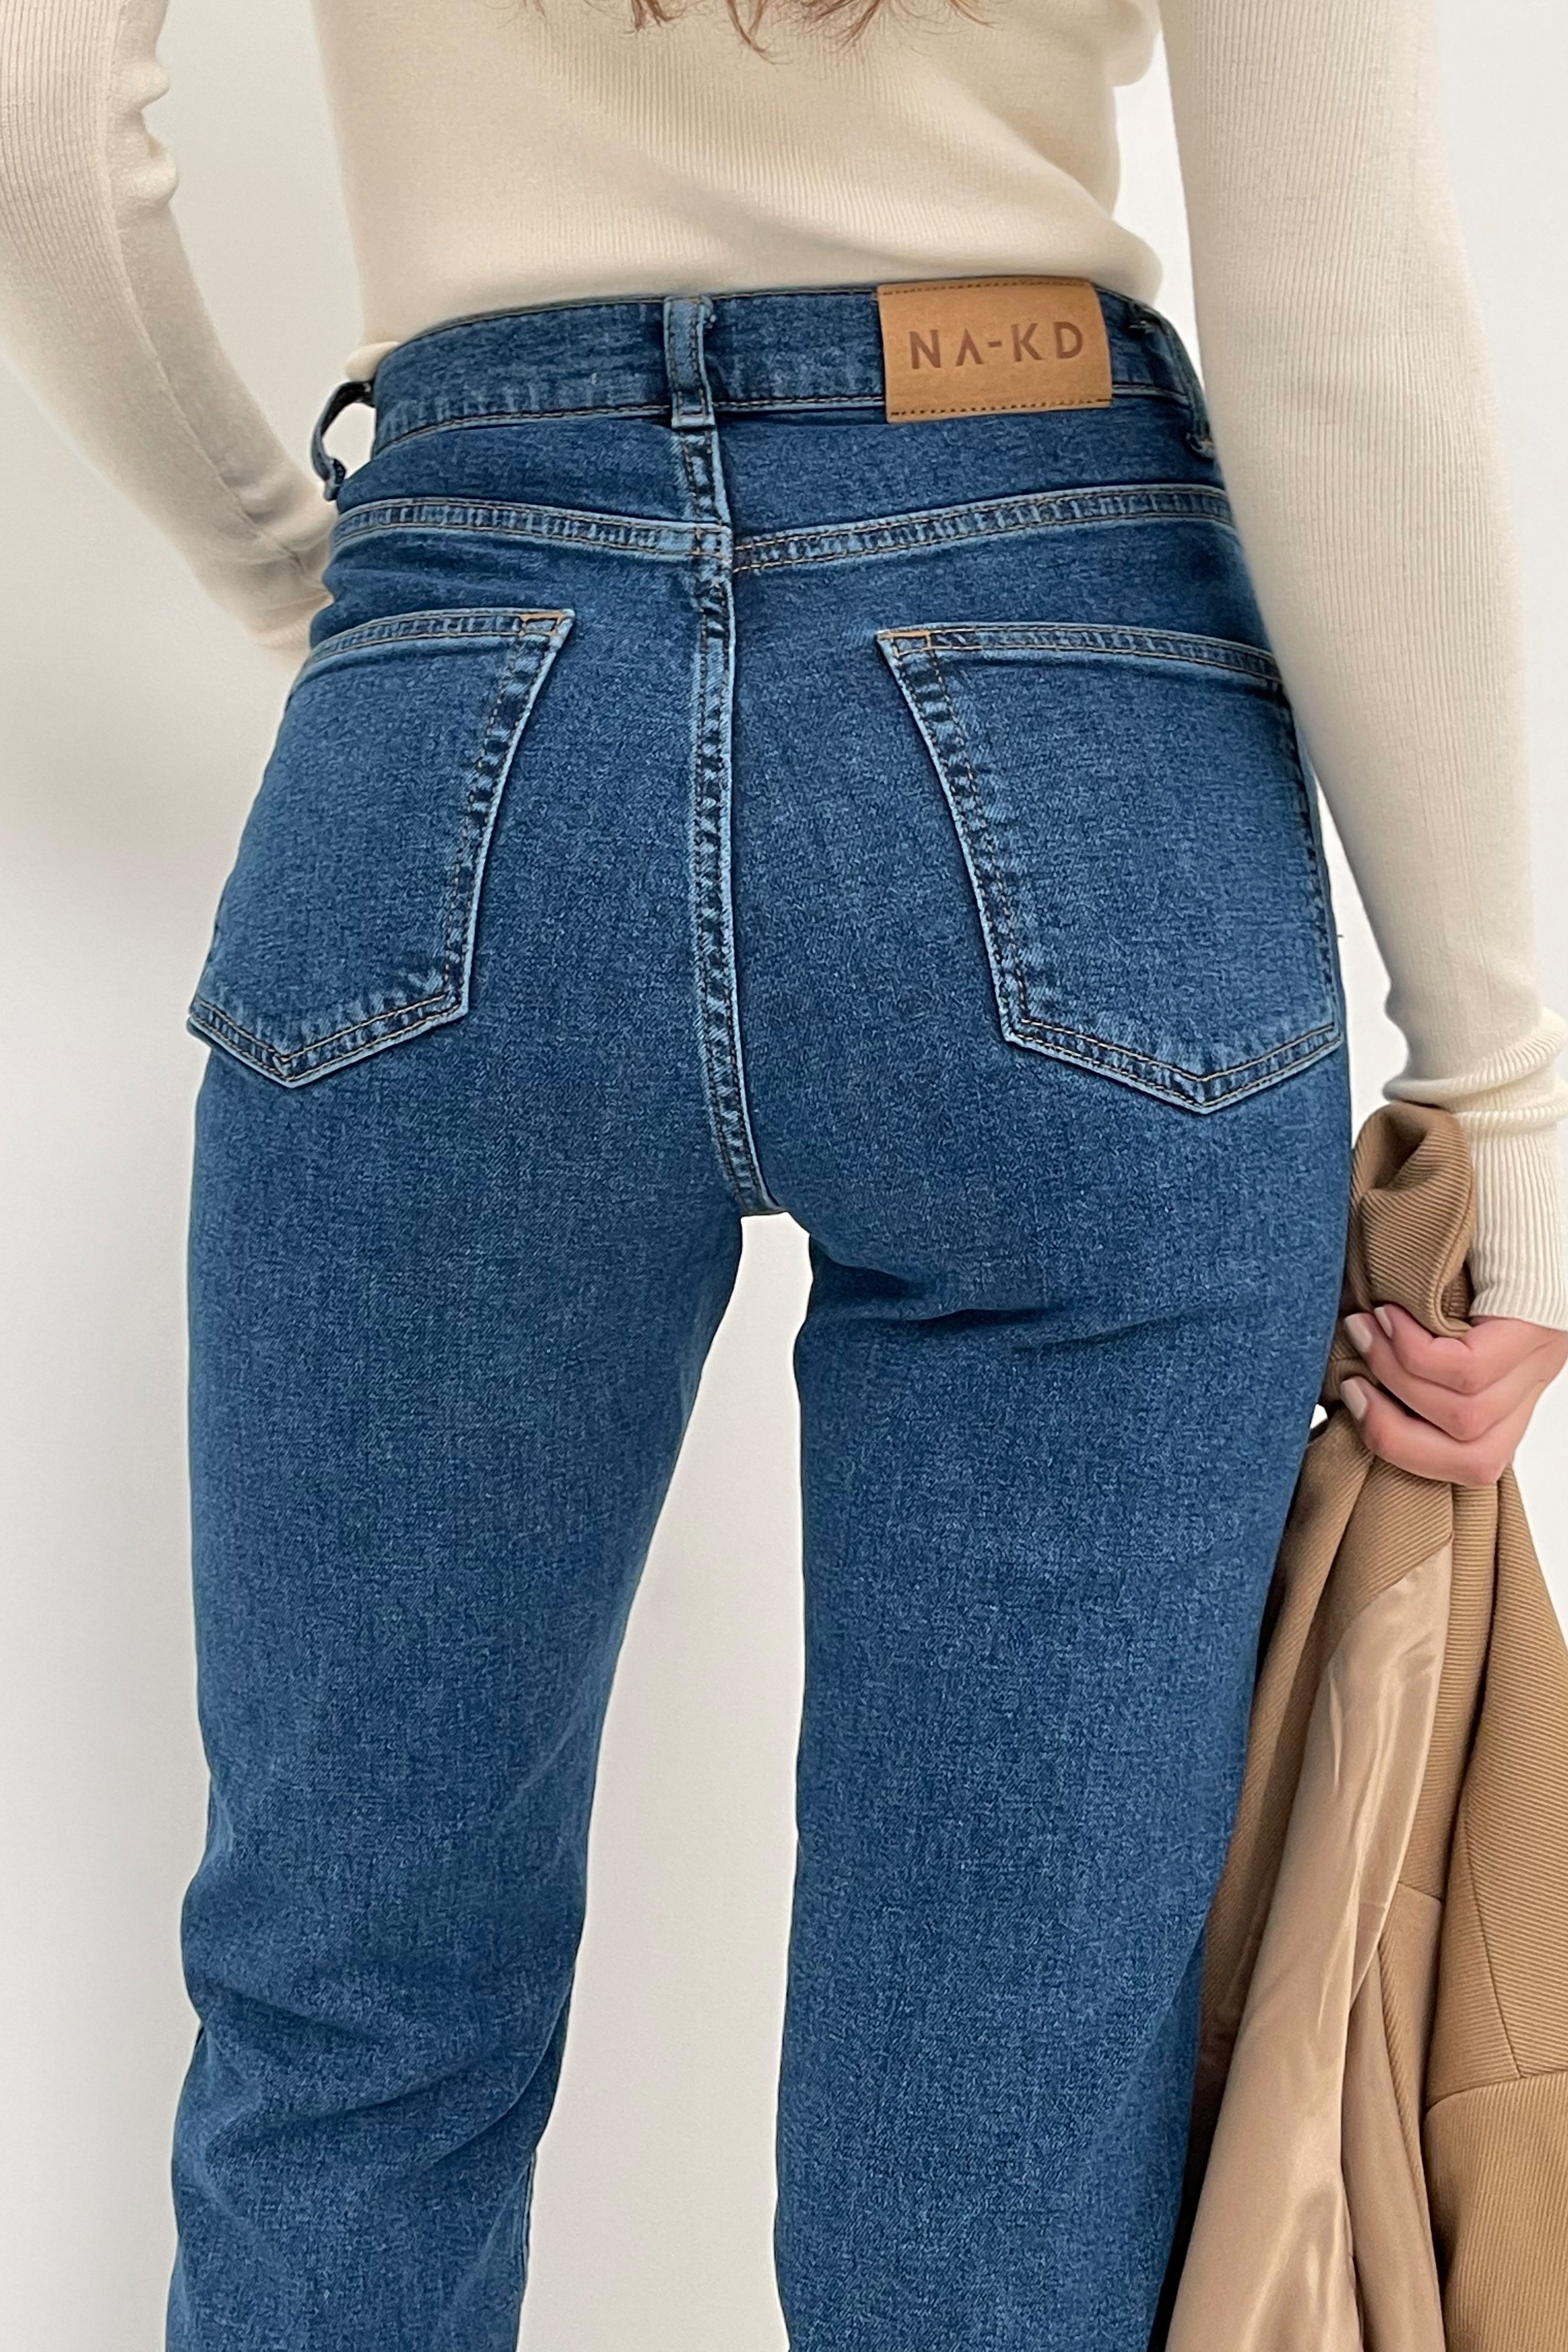 Blue Organic Straight High Waist Jeans